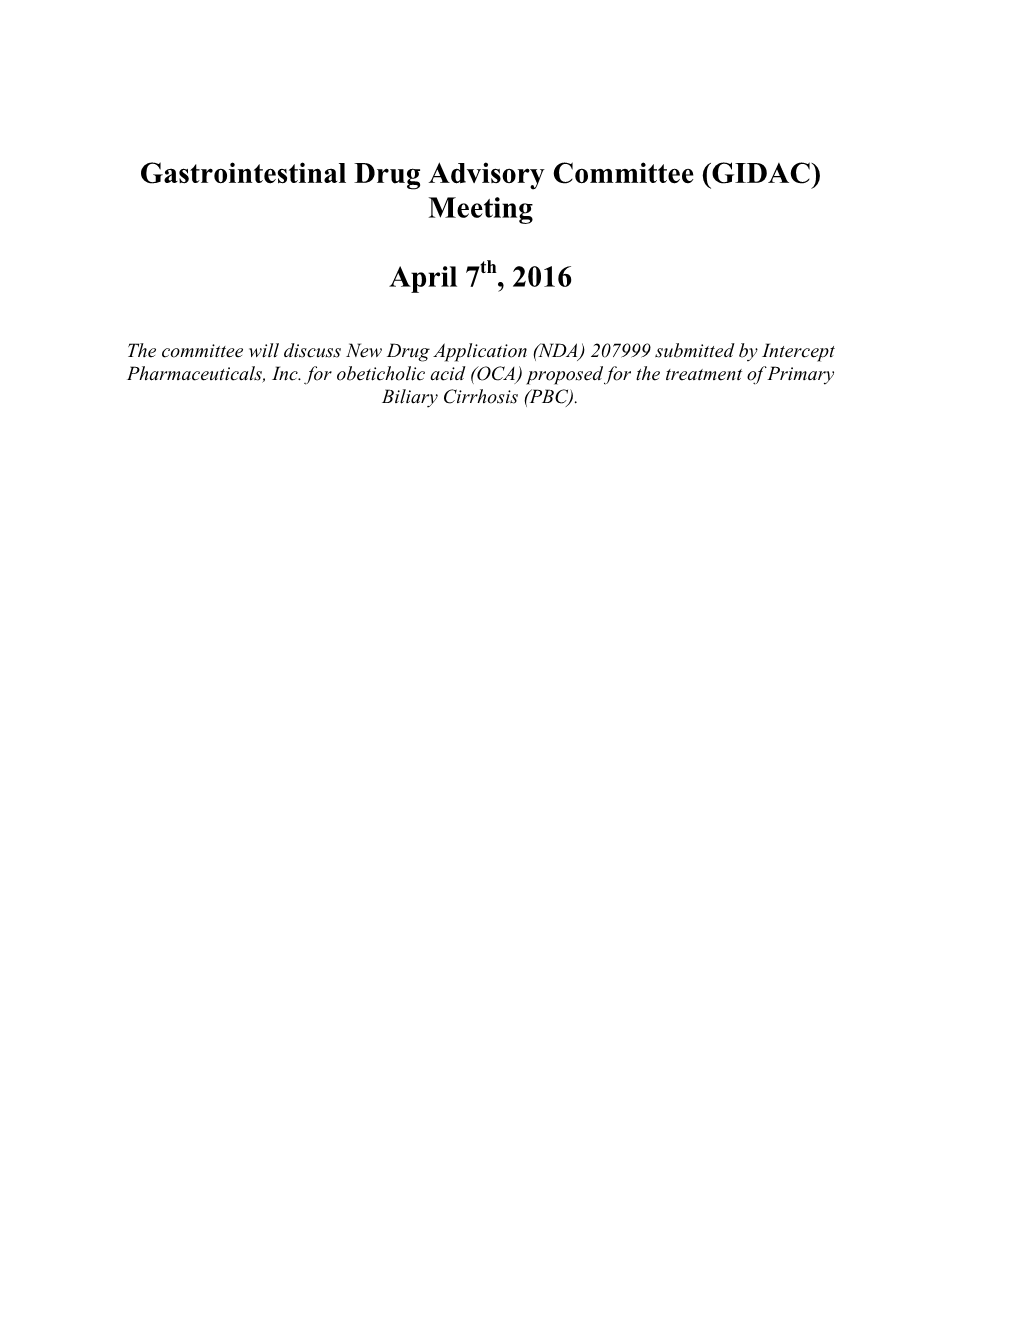 Gastrointestinal Drug Advisory Committee (GIDAC) Meeting